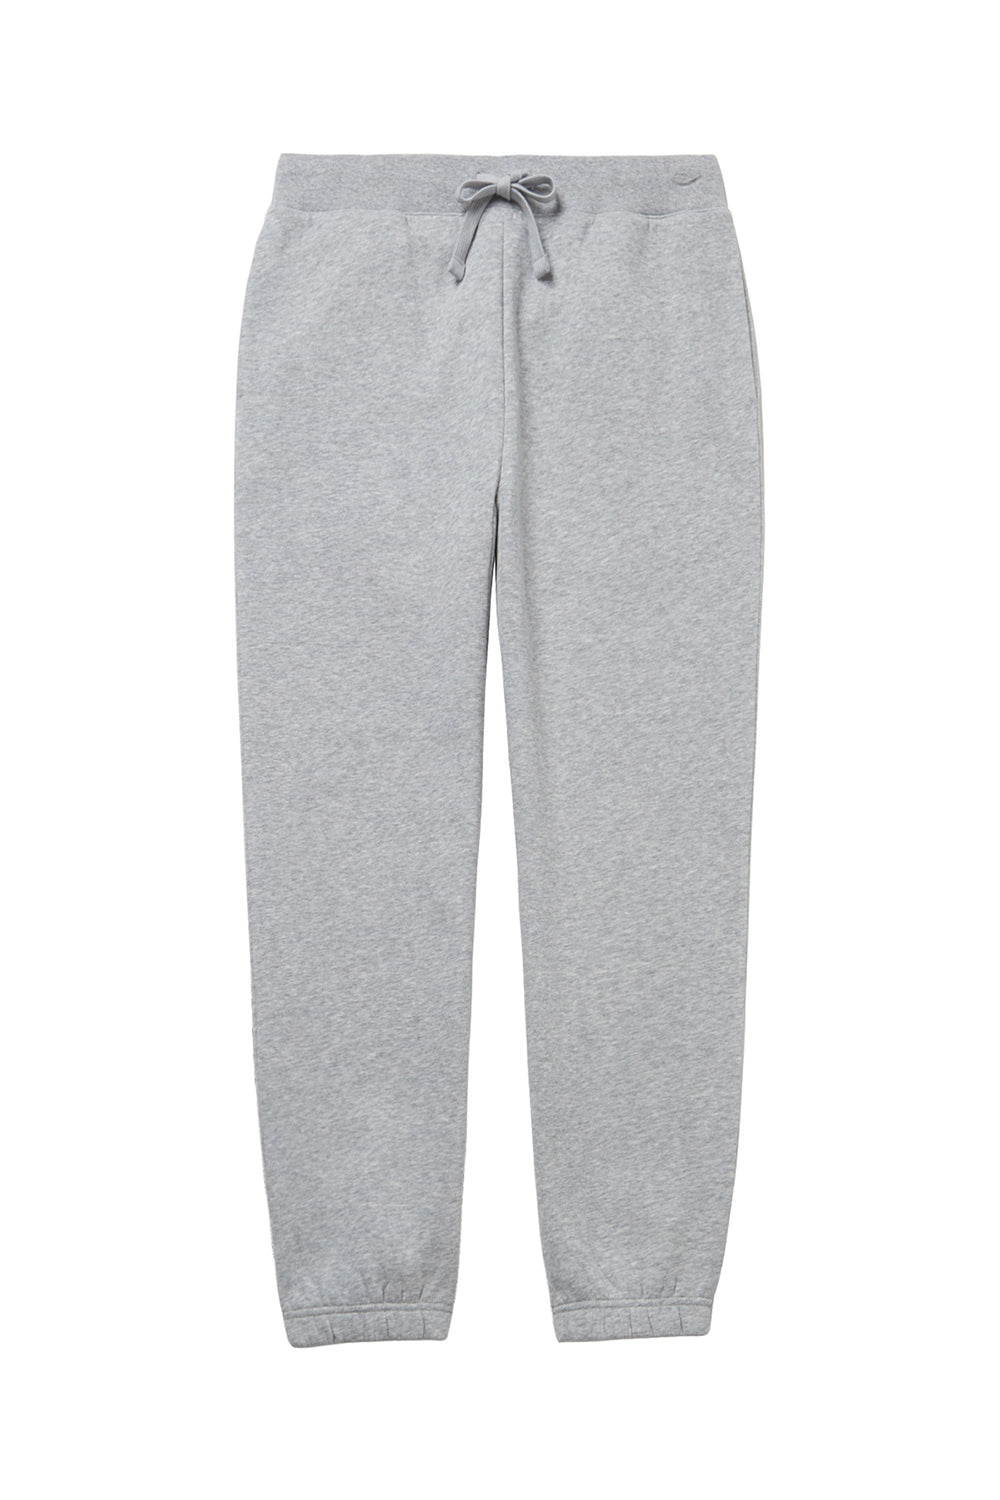 Alternative 8803PF Mens Eco Cozy Fleece Sweatpants w/ Pockets Heather Grey Flat Front